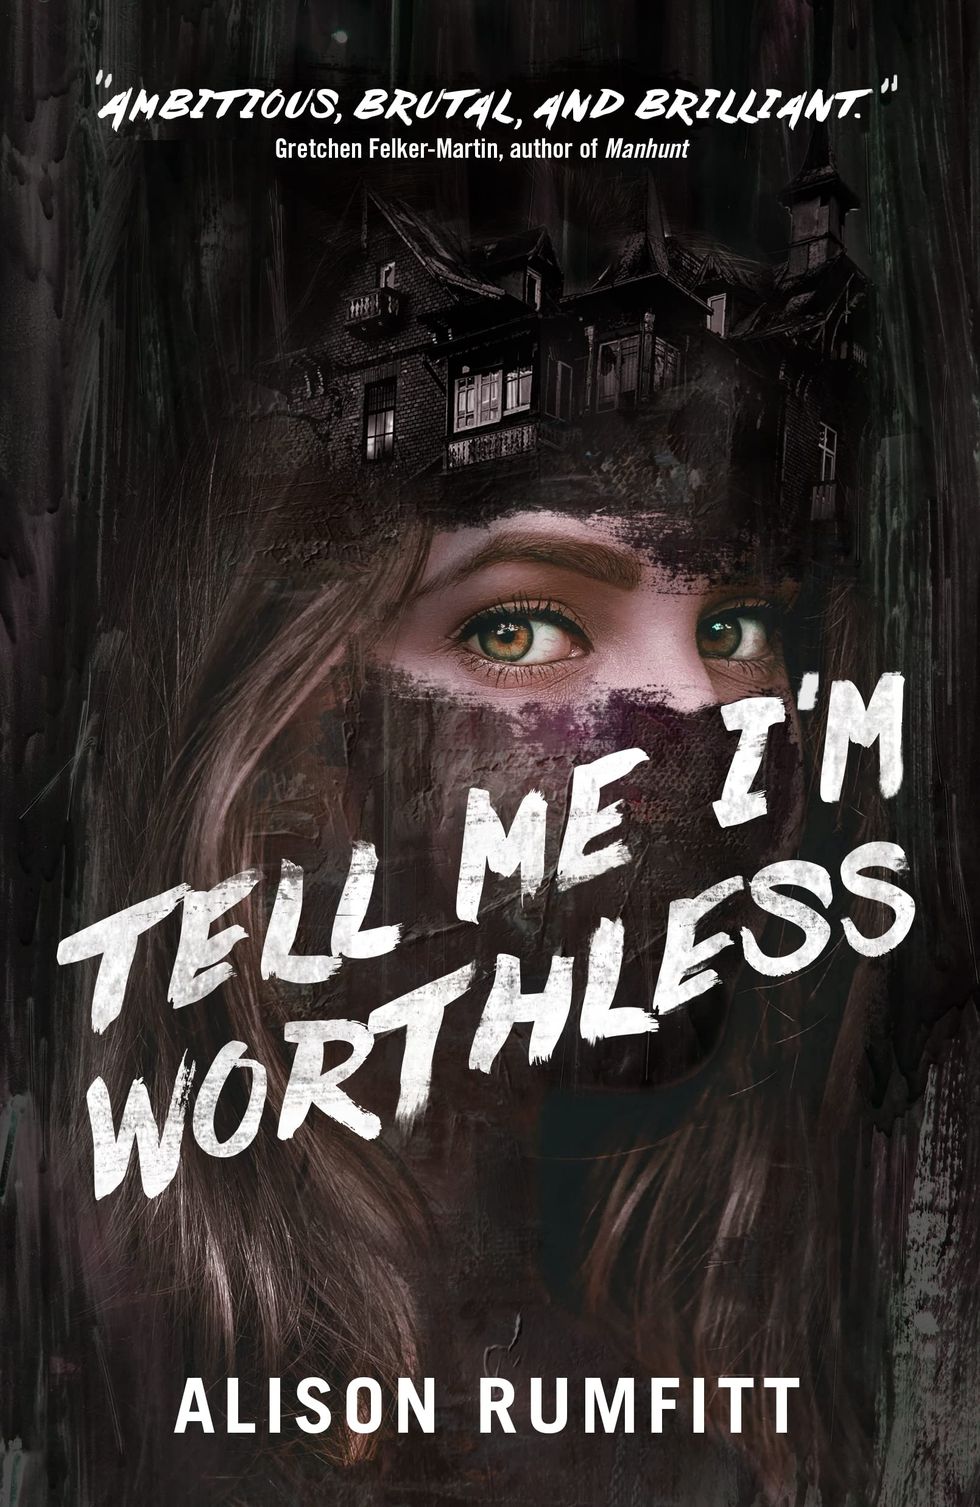 "Tell Me I'm Worthless" by Alison Rumfitt